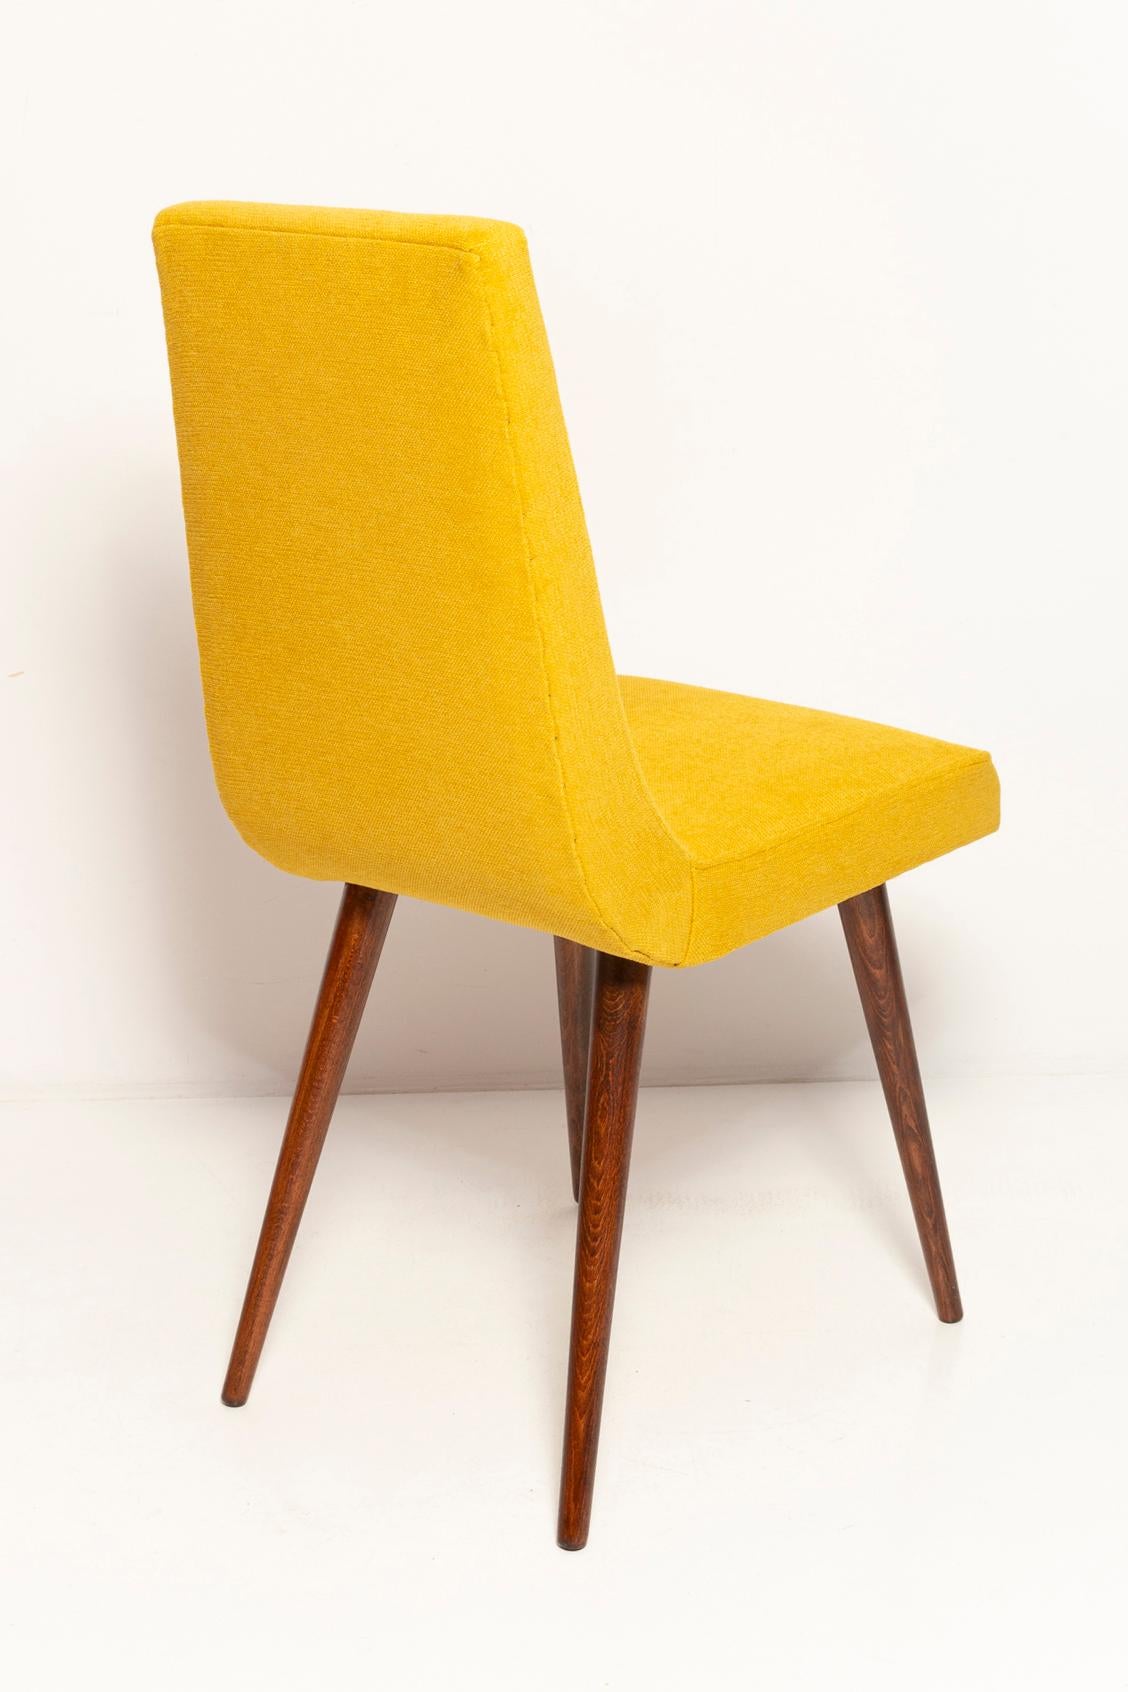 Midcentury Mustard Yellow Wool Chair, Rajmund Halas, Europe, 1960s For Sale 3